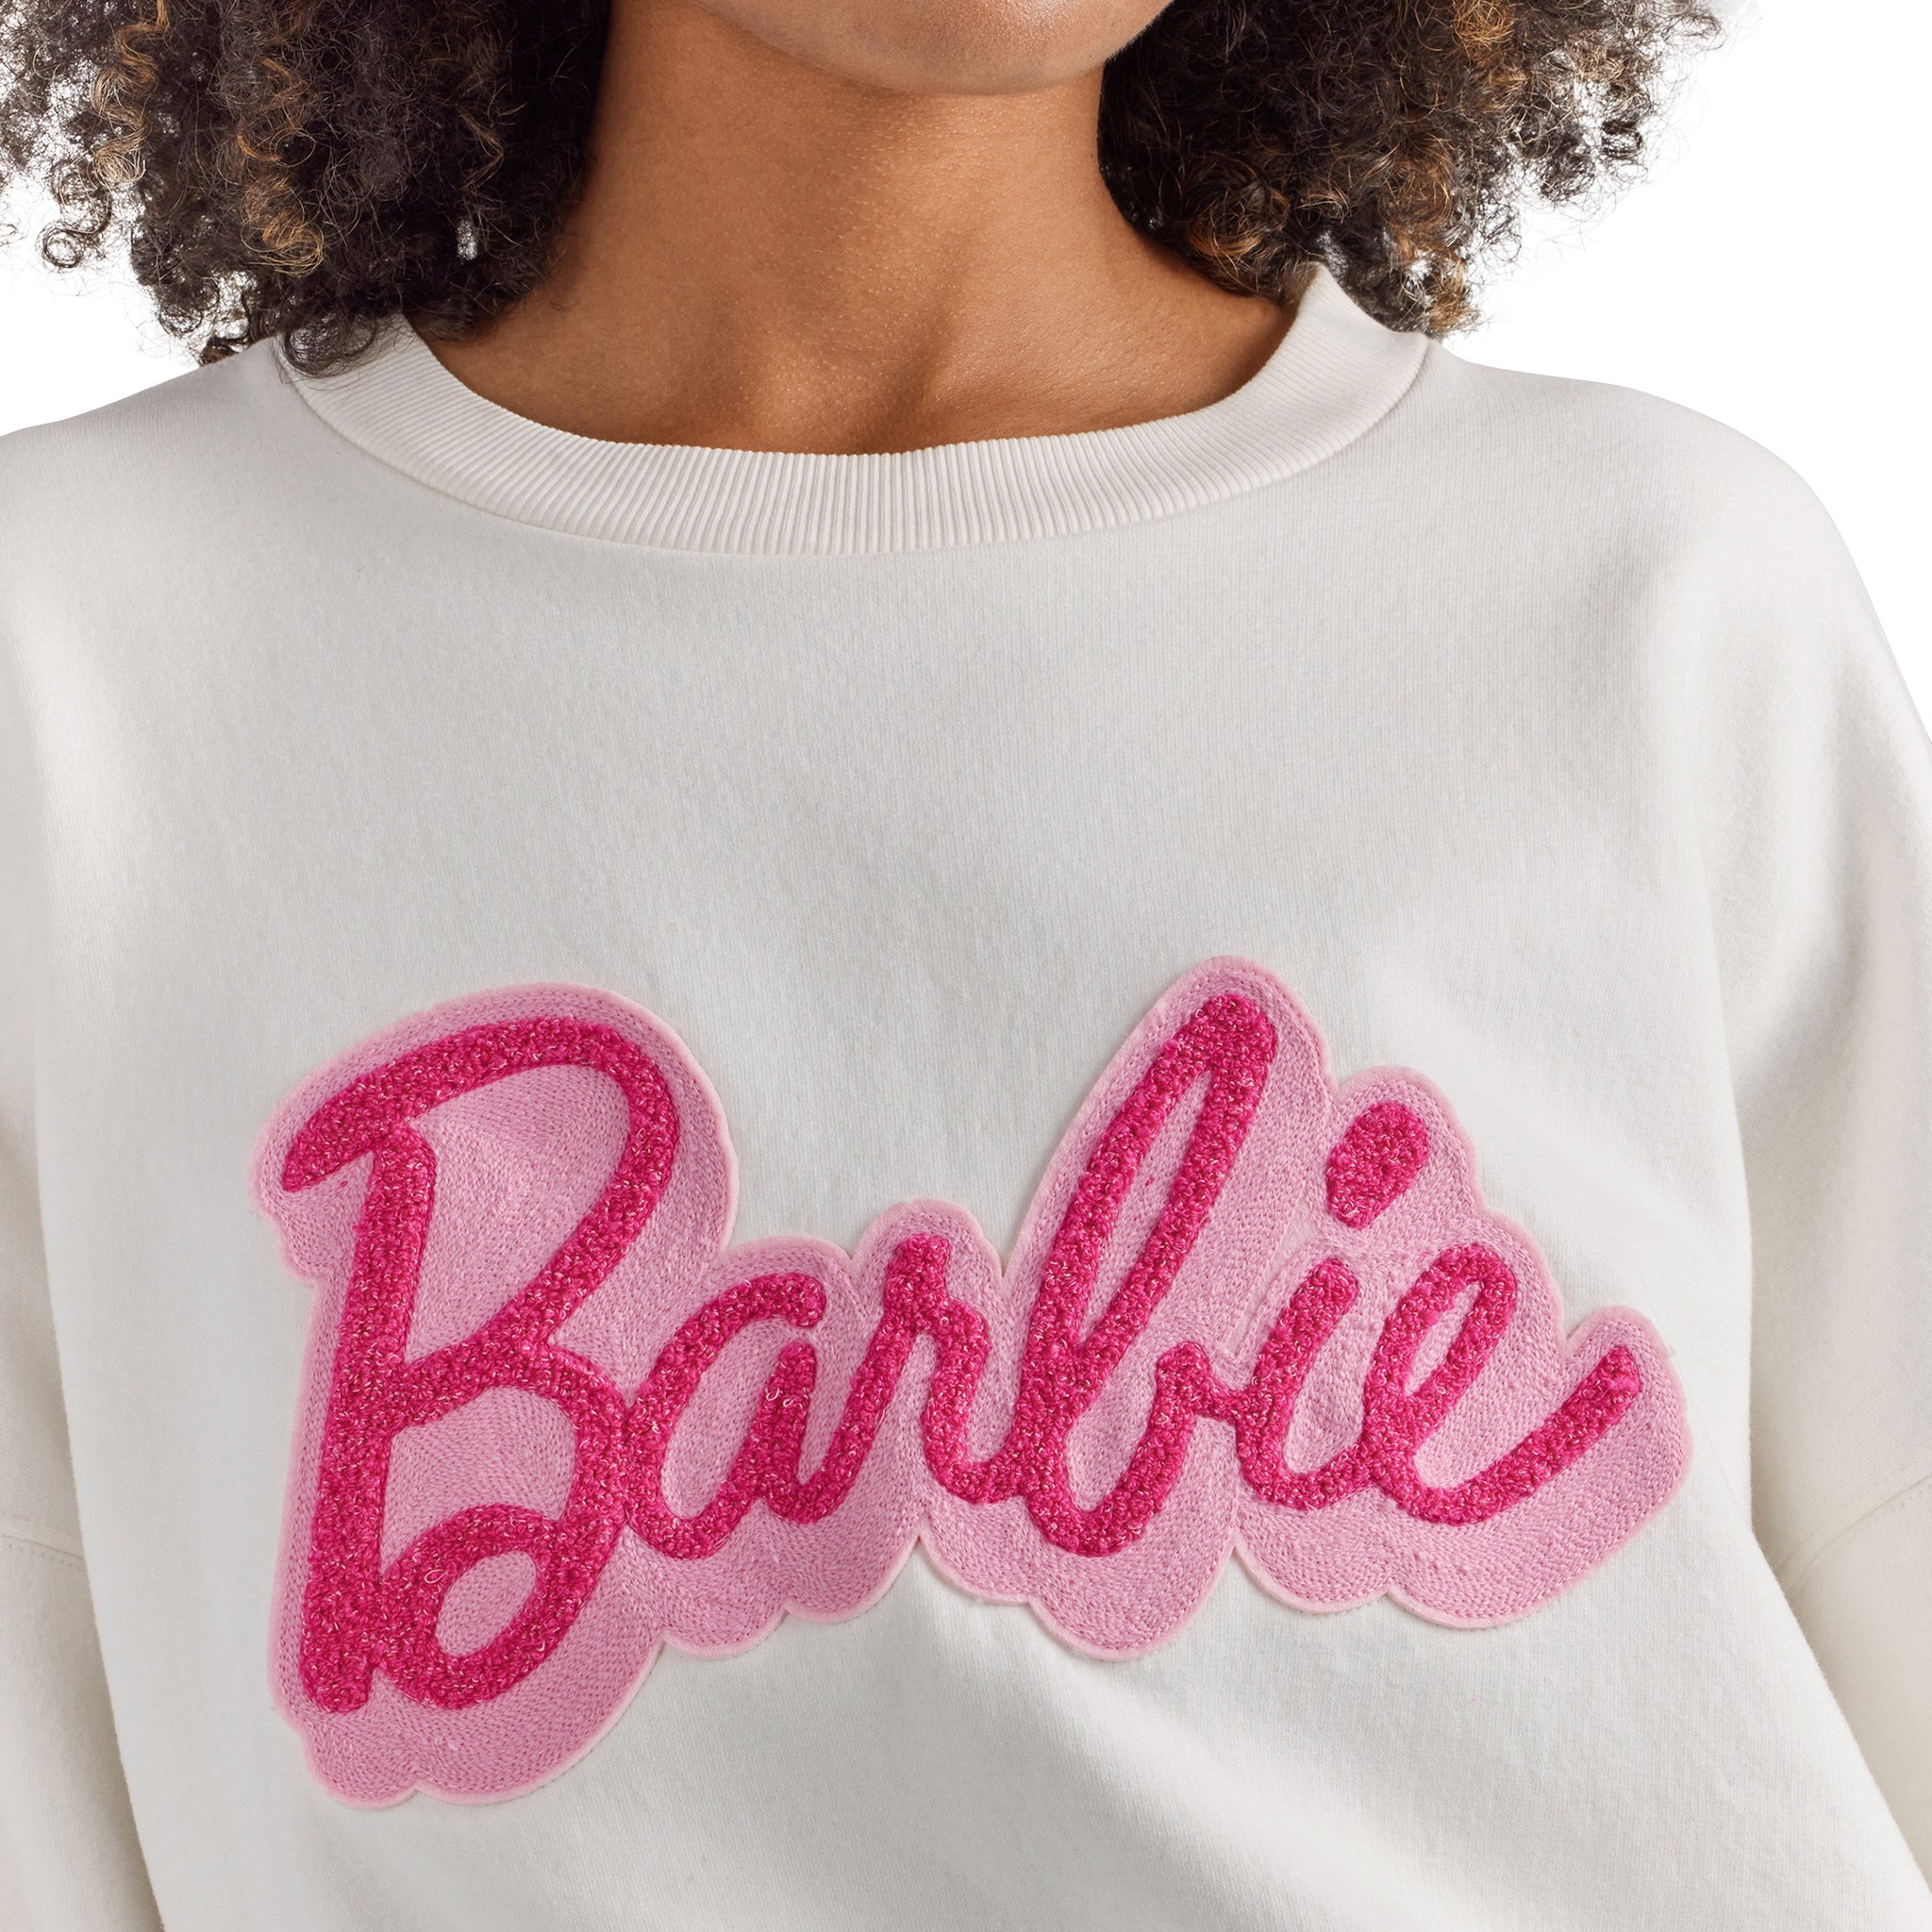 Wrangler x Barbie™ Relaxed Logo Sweatshirt, Damen